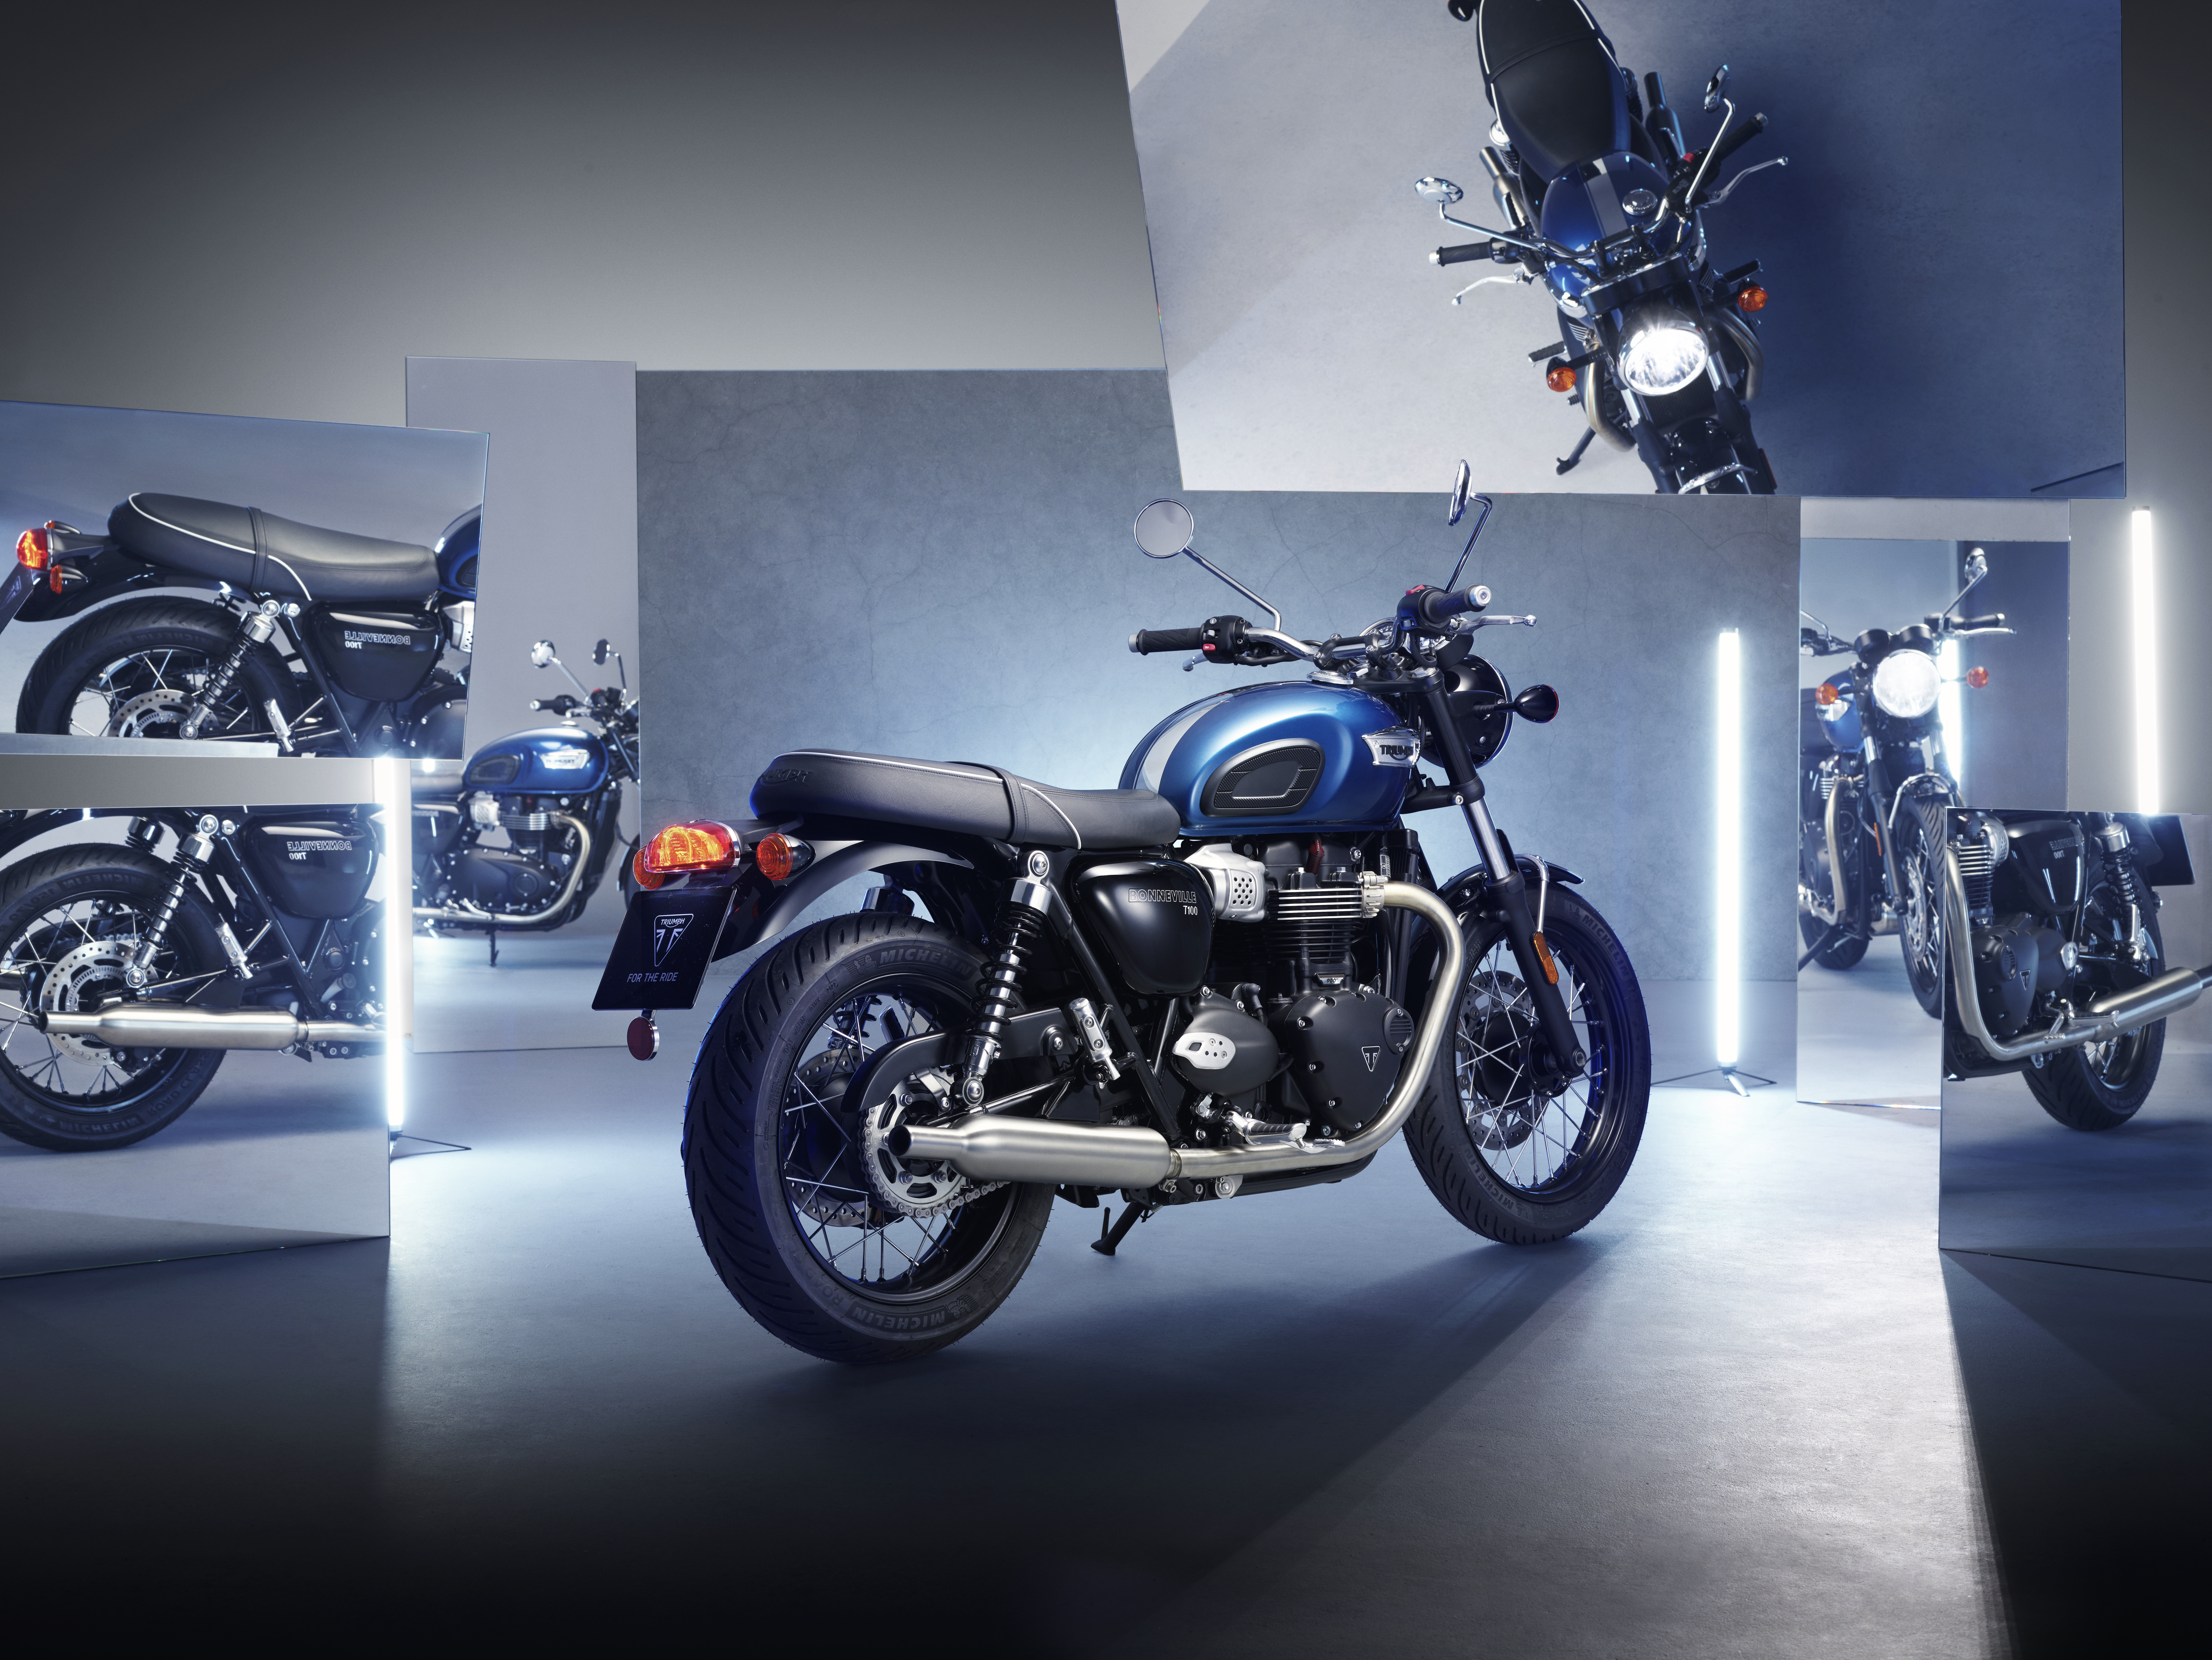 Triumph Bonneville T100 Chrome Edition motorcycles showcased as HD desktop wallpaper in a modern showroom setting.